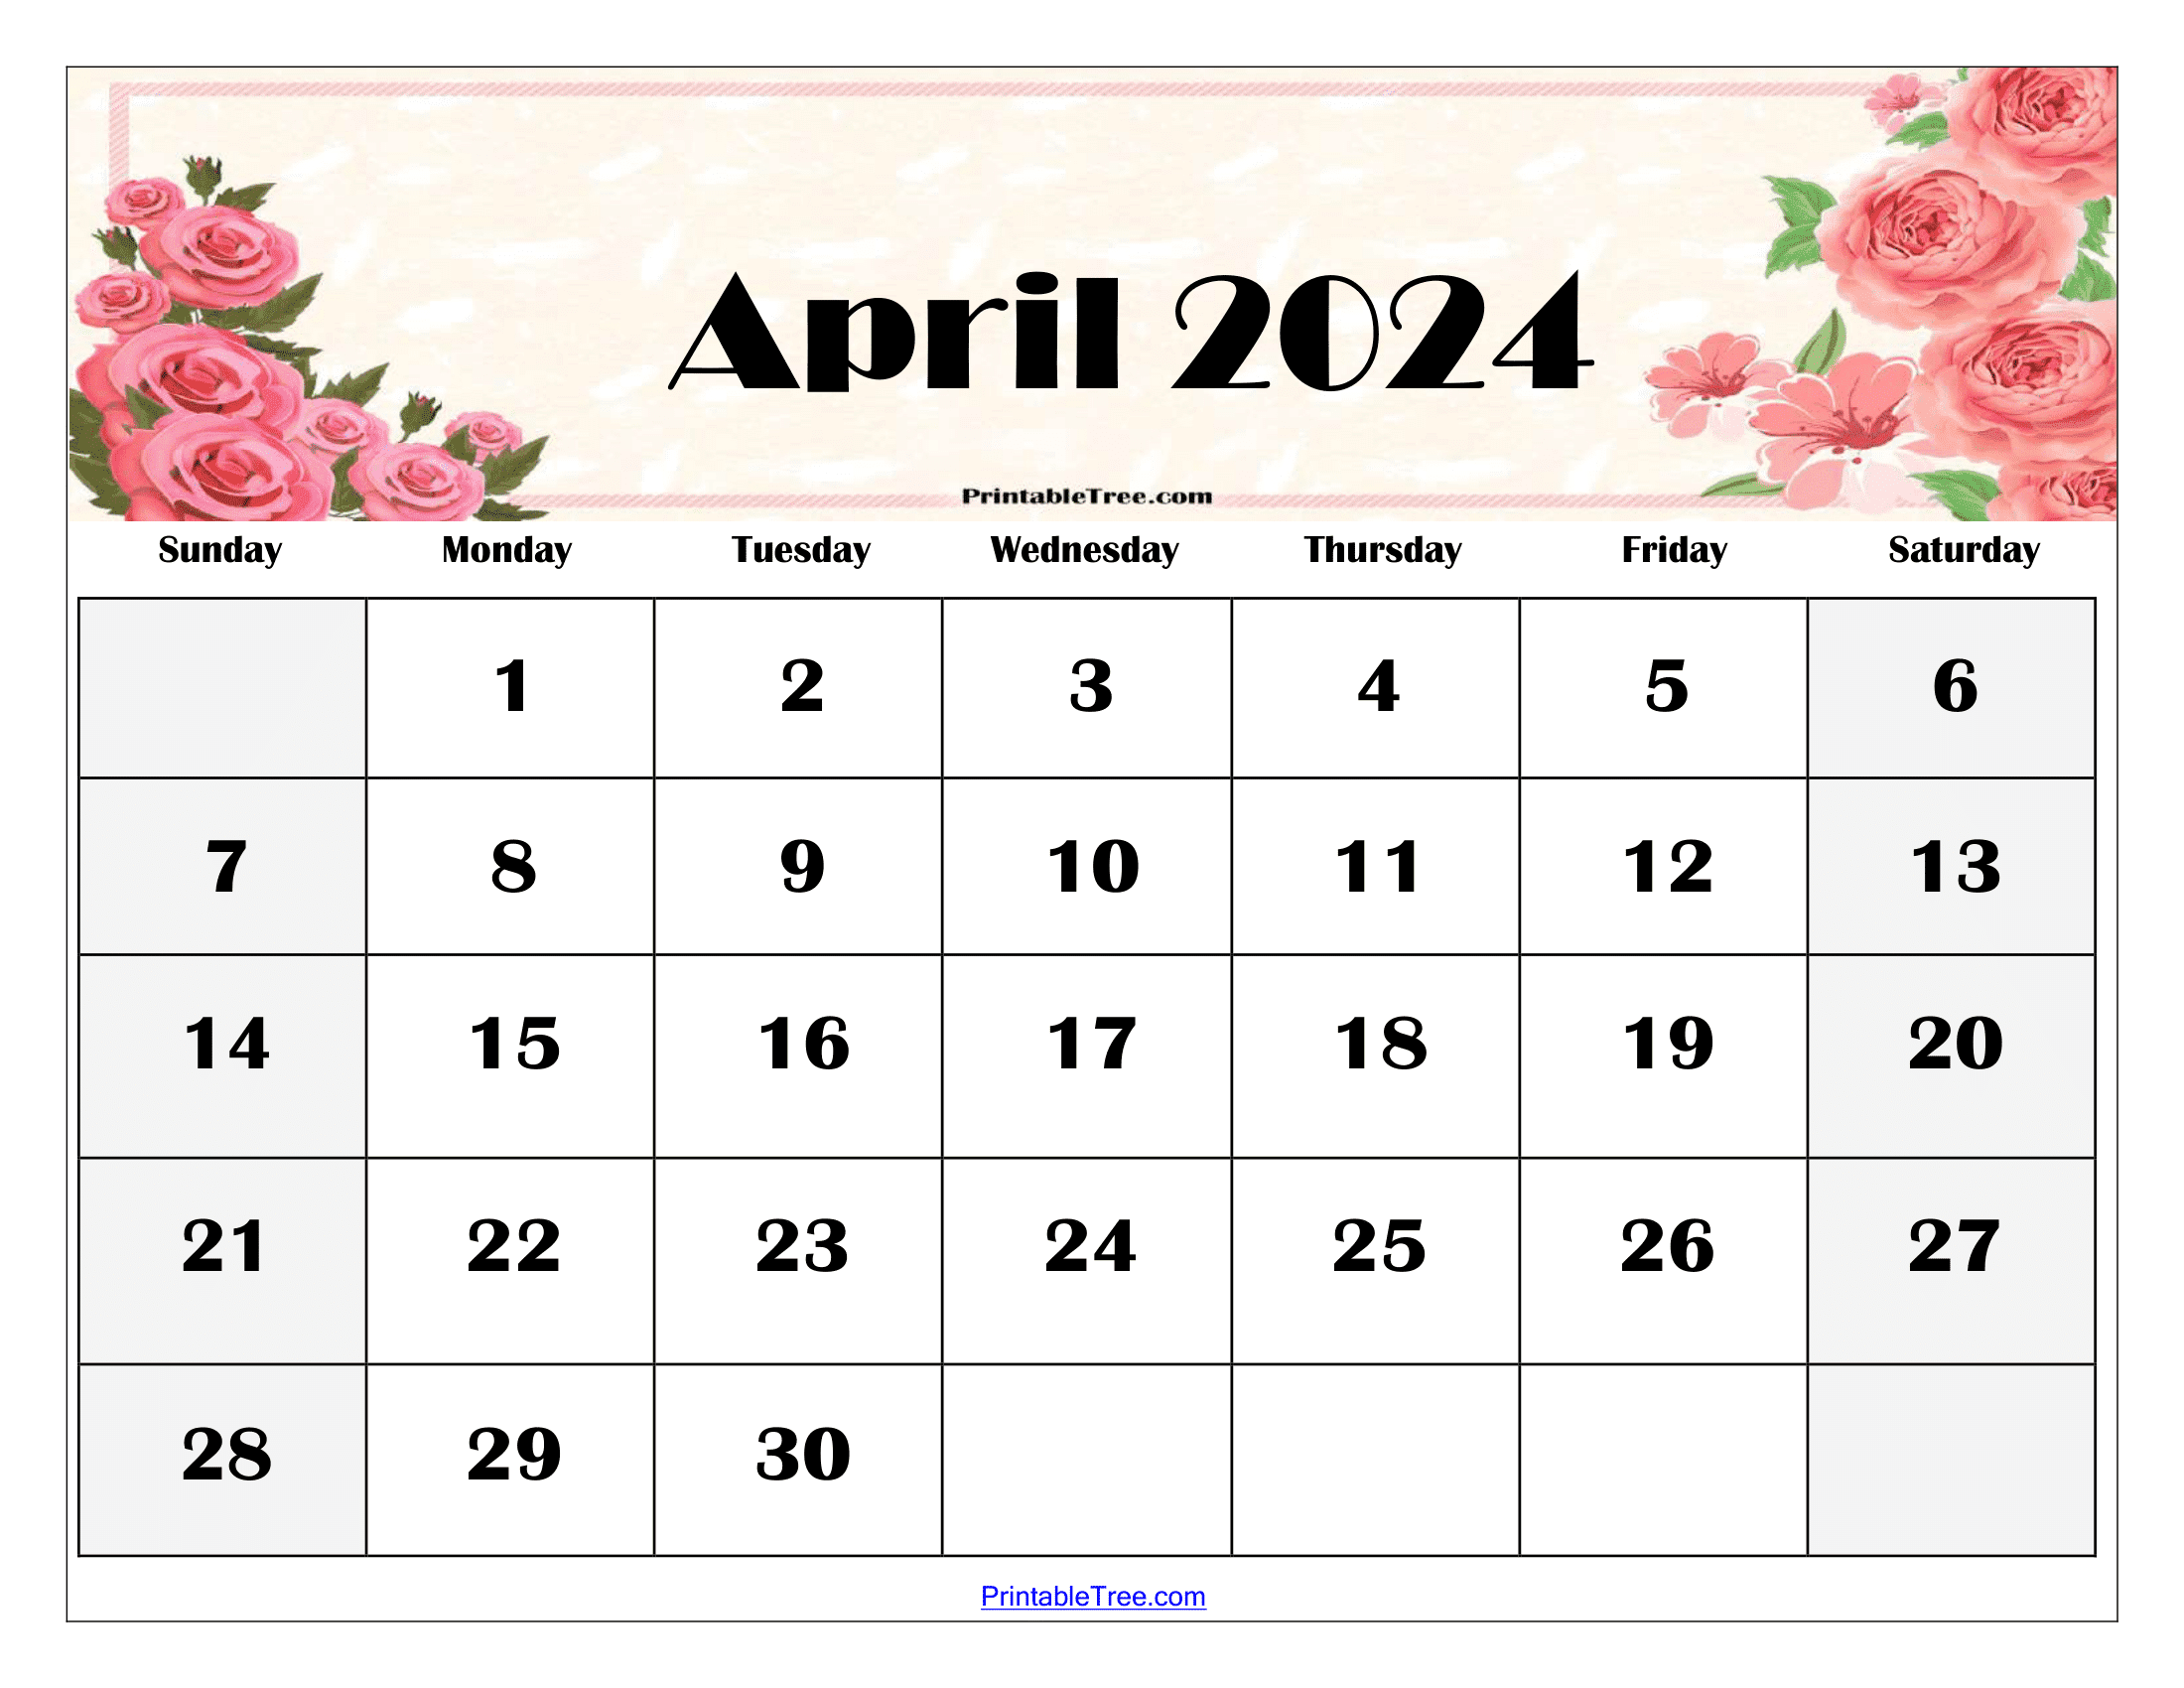 April 2024 Calendar Printable April Blank Calendar 2024 Easy To Use - Free Printable April 2024 Calendar Large Print